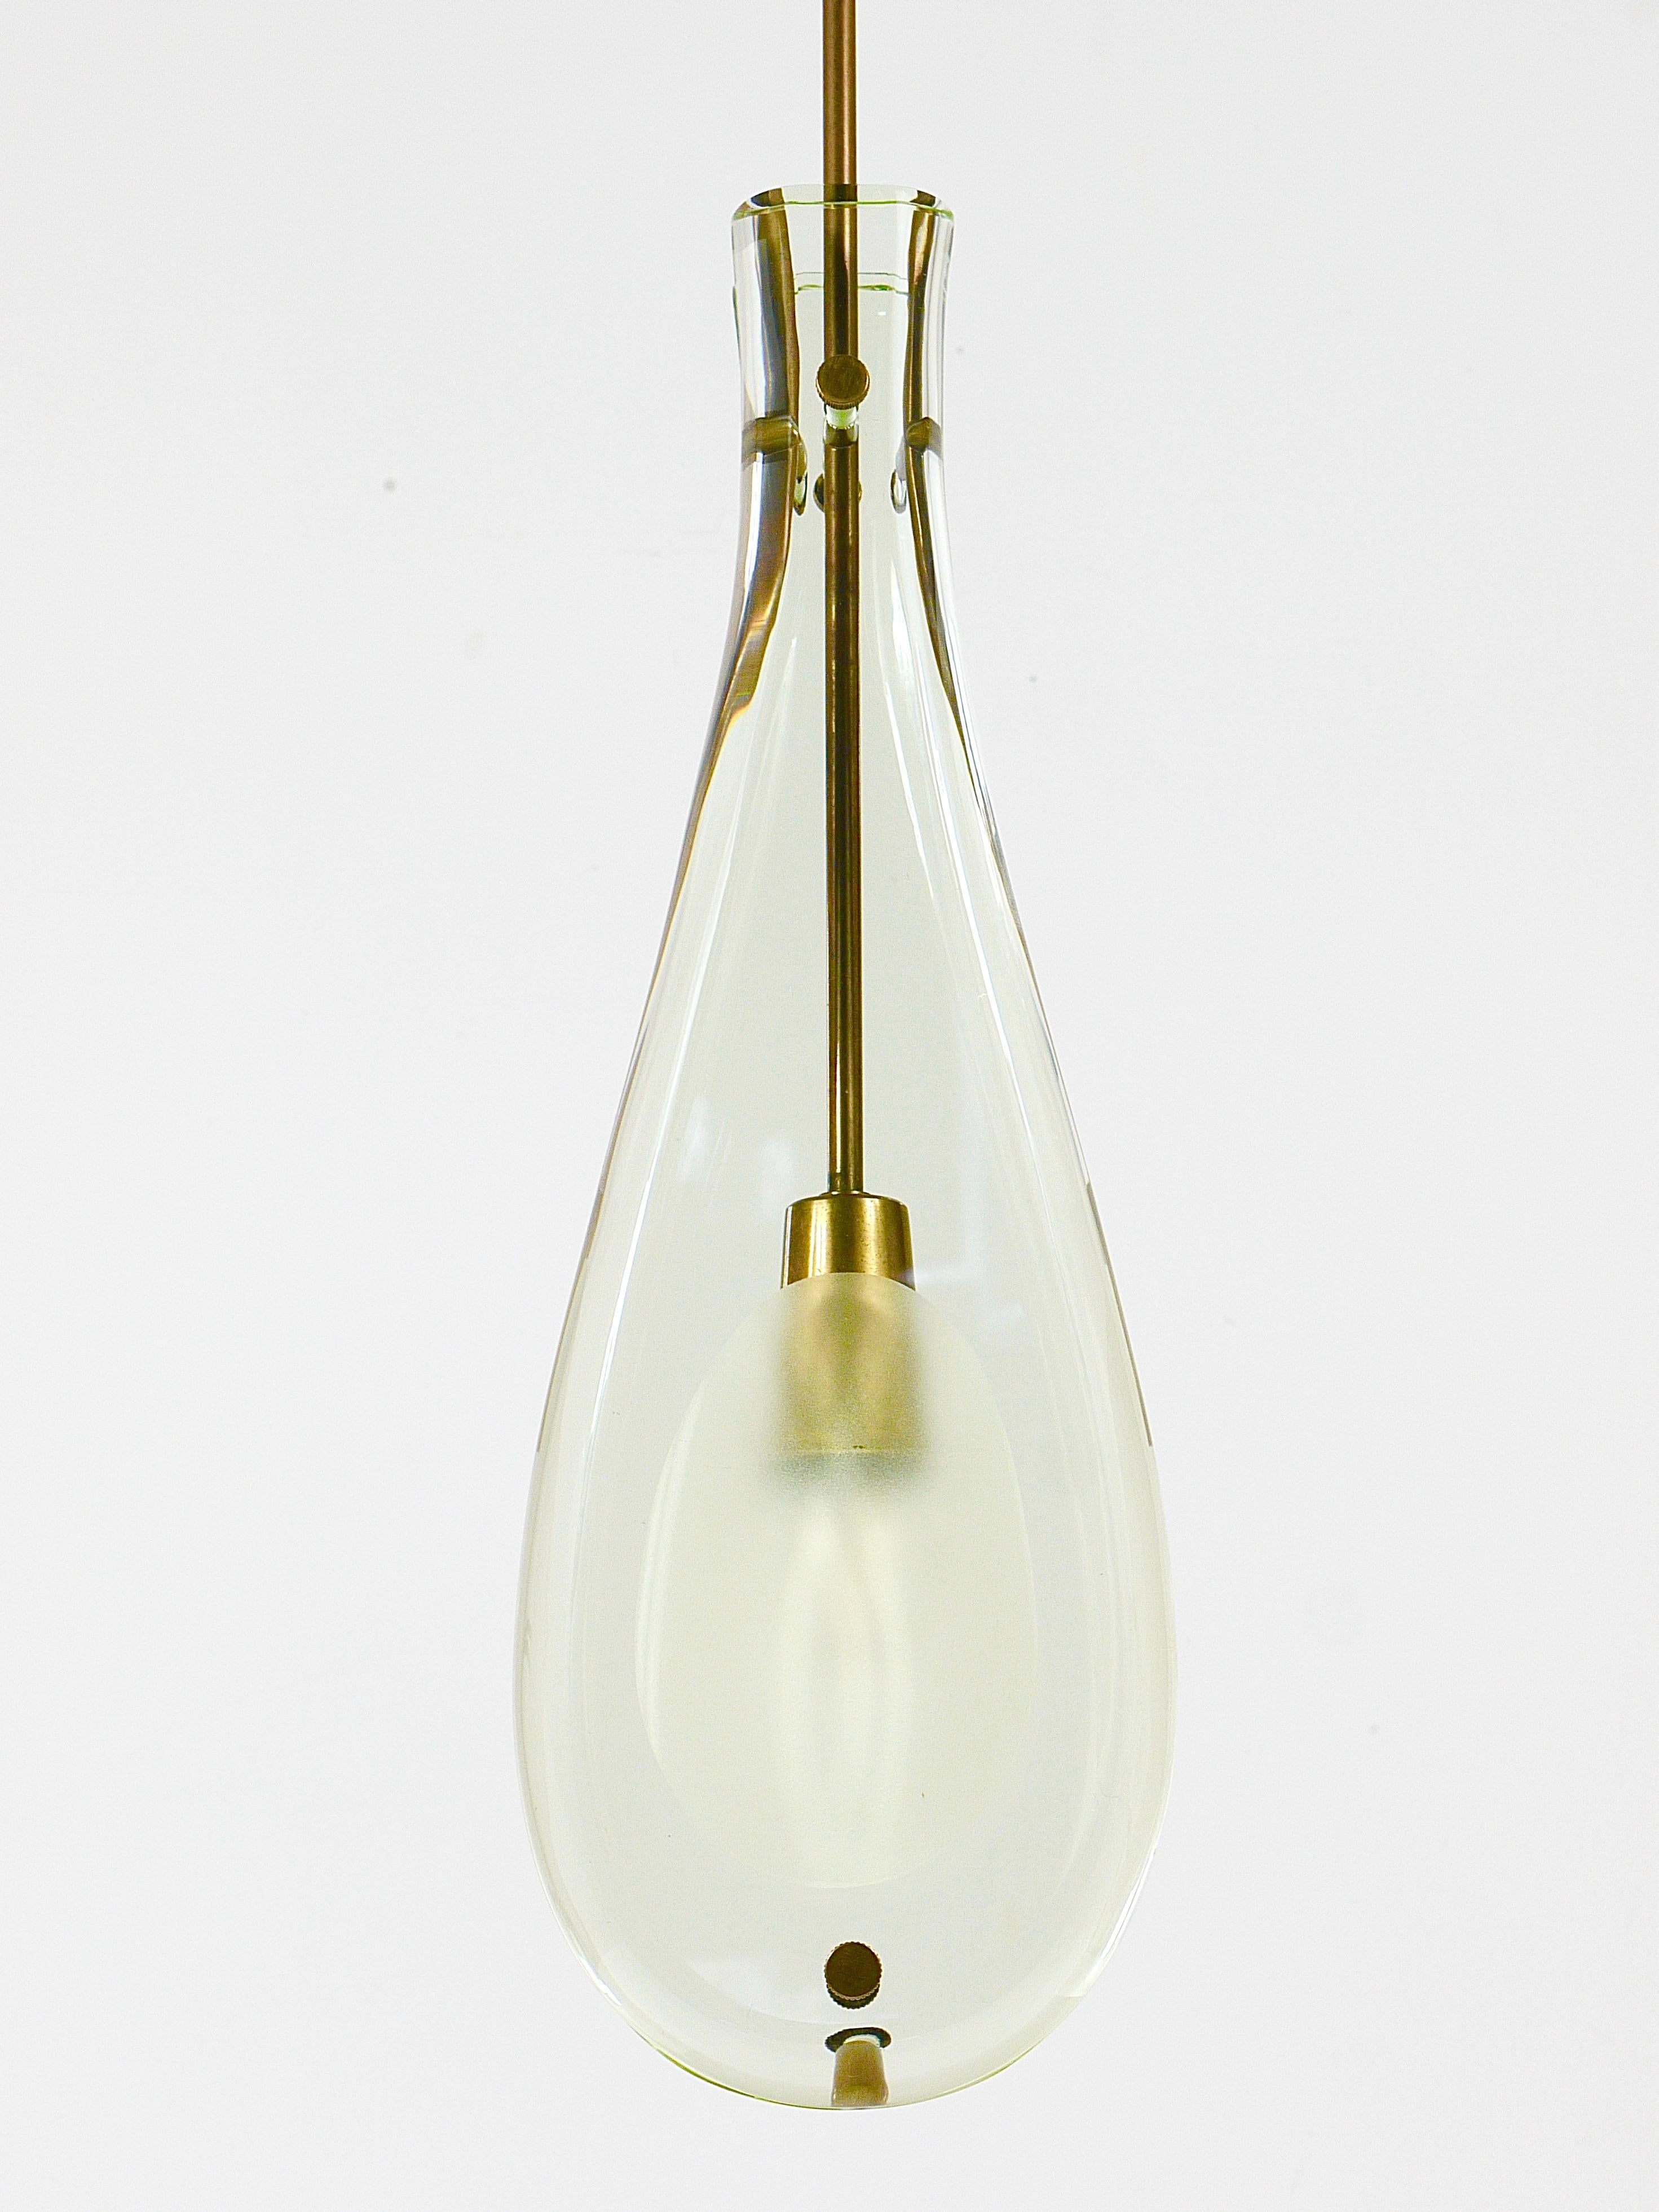 Max Ingrad For Fontana Arte Drop Pendant Lamp, Model 2259, Italy, 1960s For Sale 4